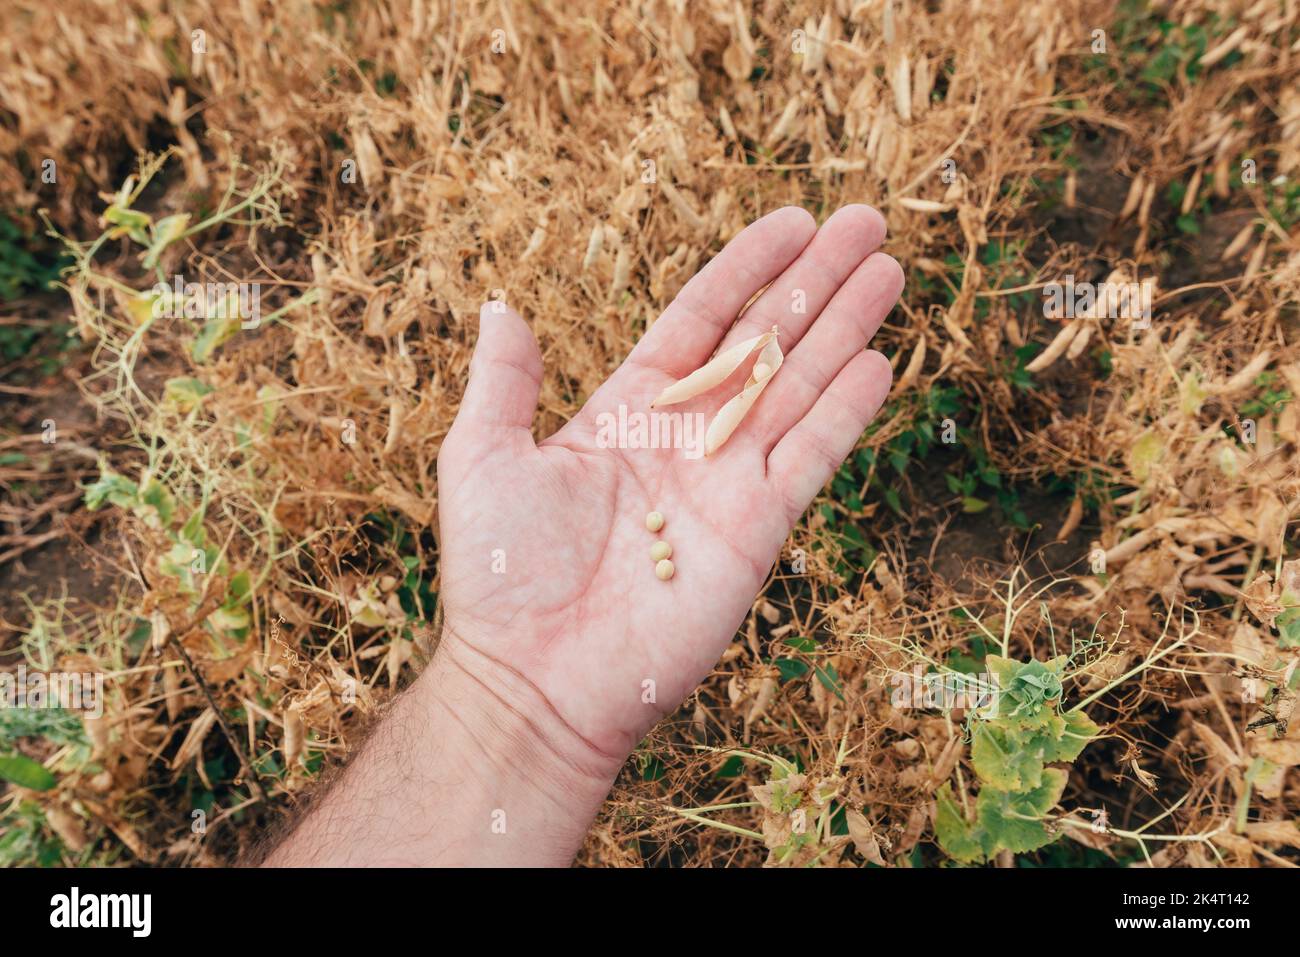 Farmer examining green pea pod, close up of hand pov image with selective focus Stock Photo